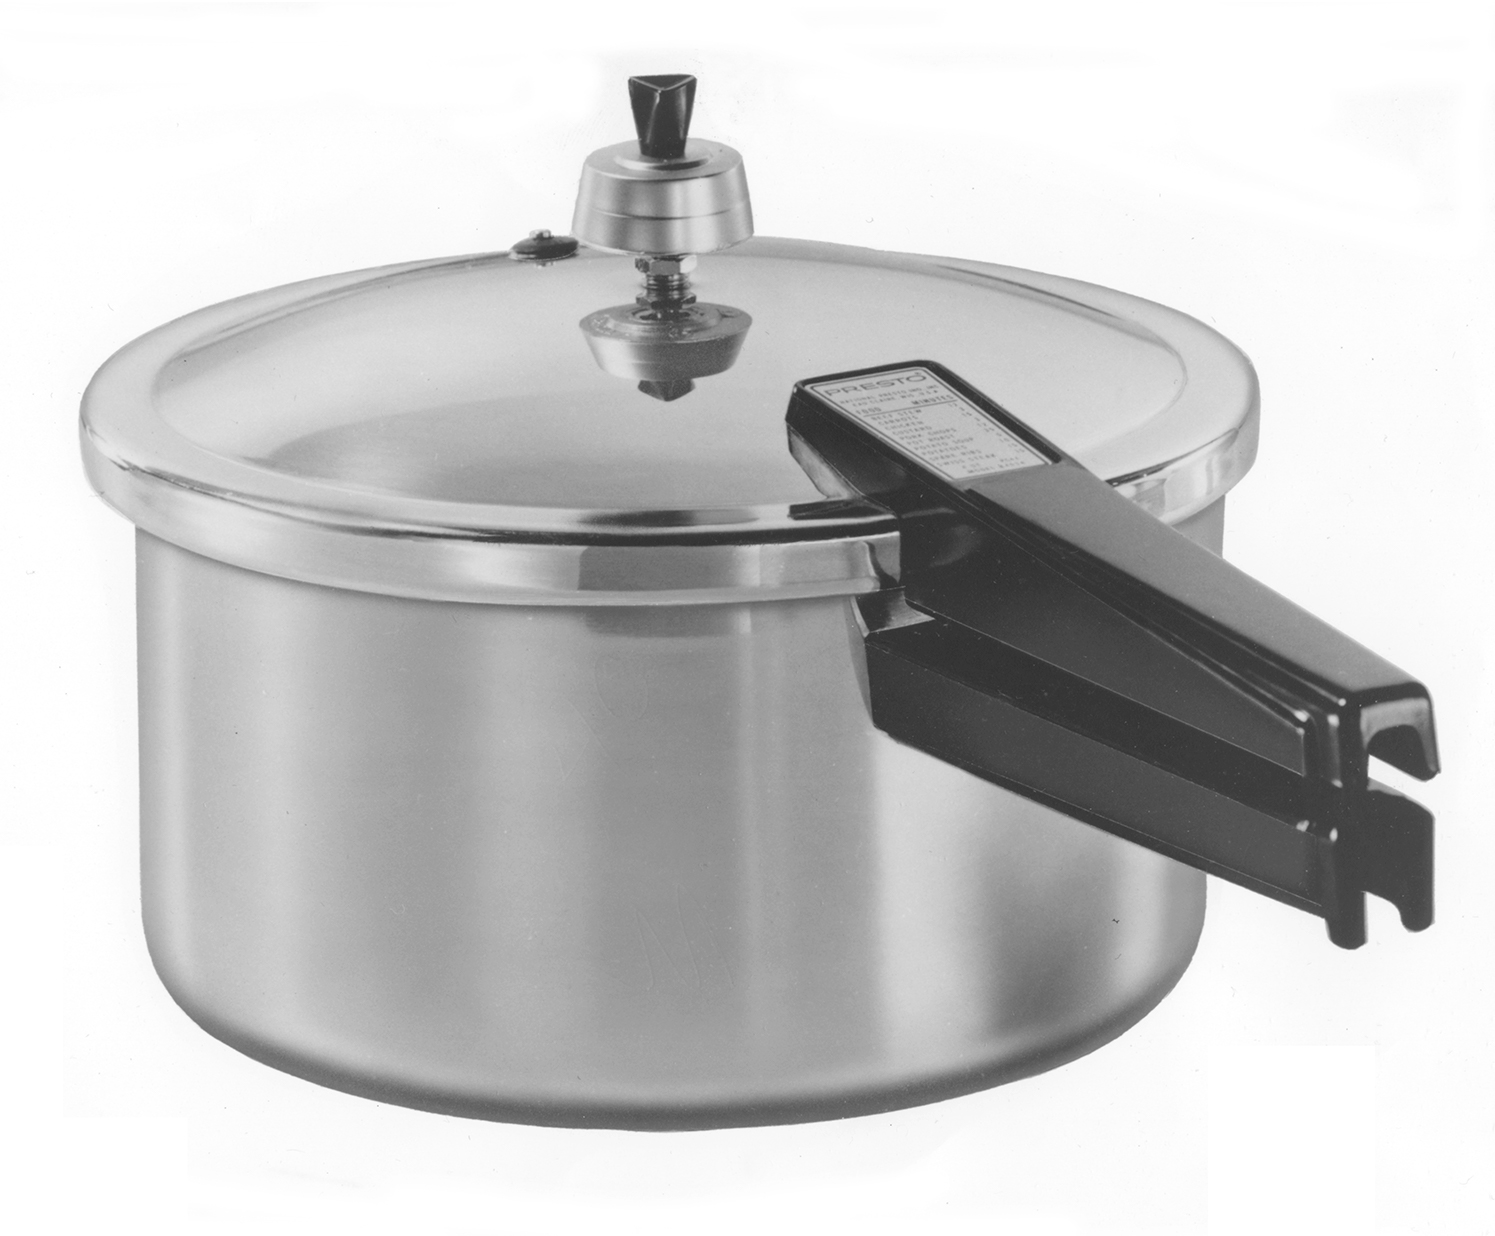 4-Quart Stainless Steel Pressure Cooker - Pressure Cookers - Presto®